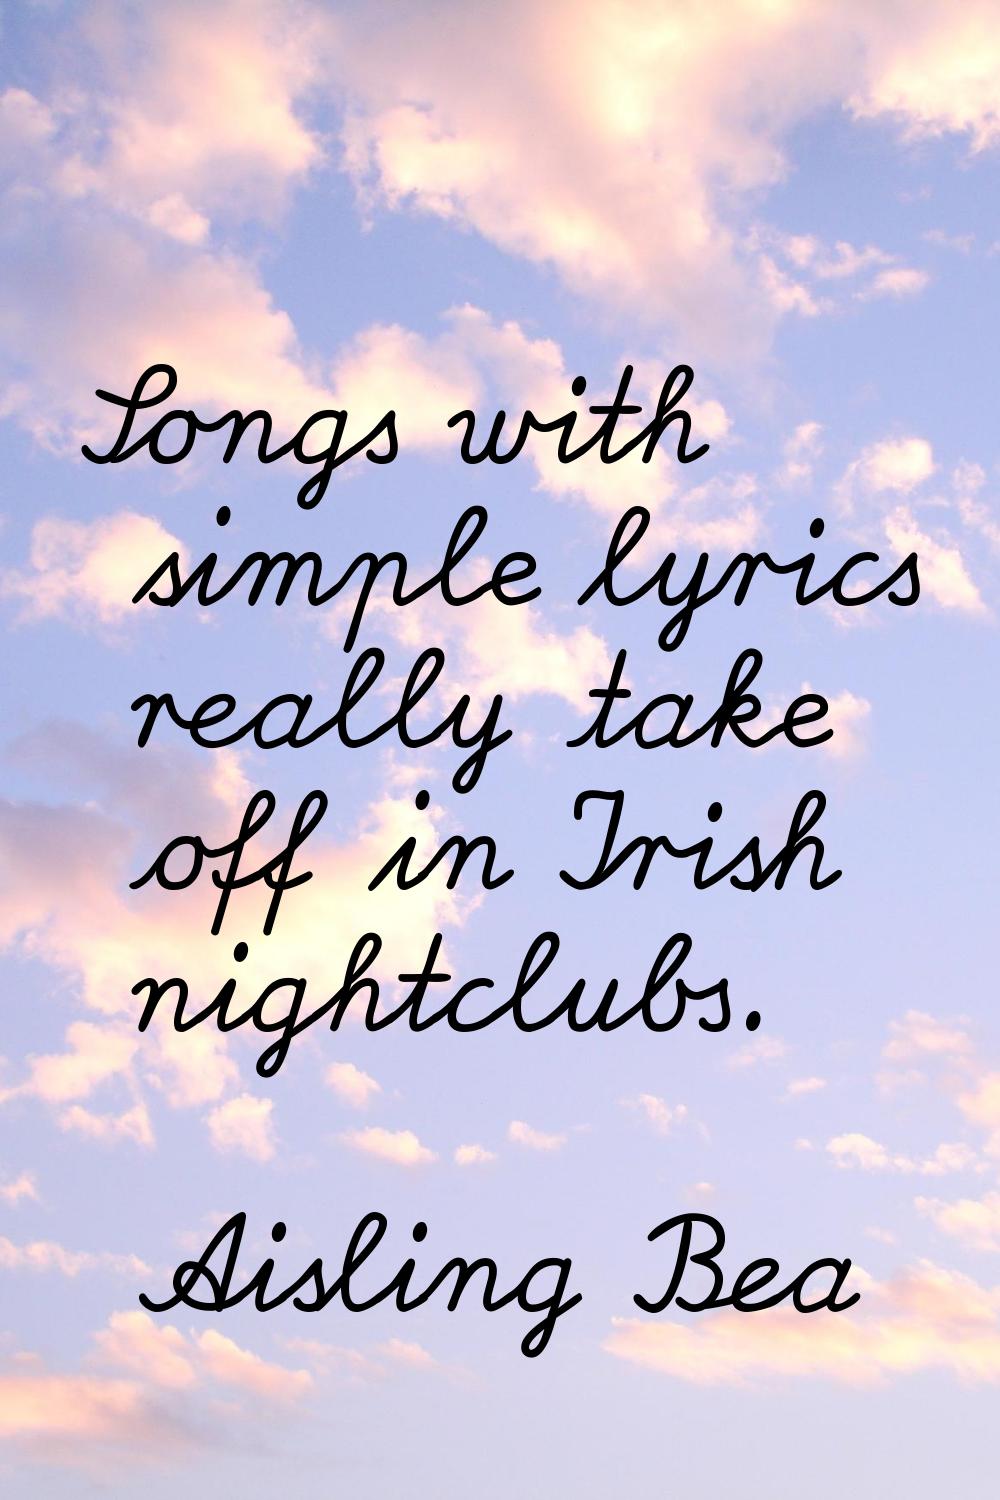 Songs with simple lyrics really take off in Irish nightclubs.